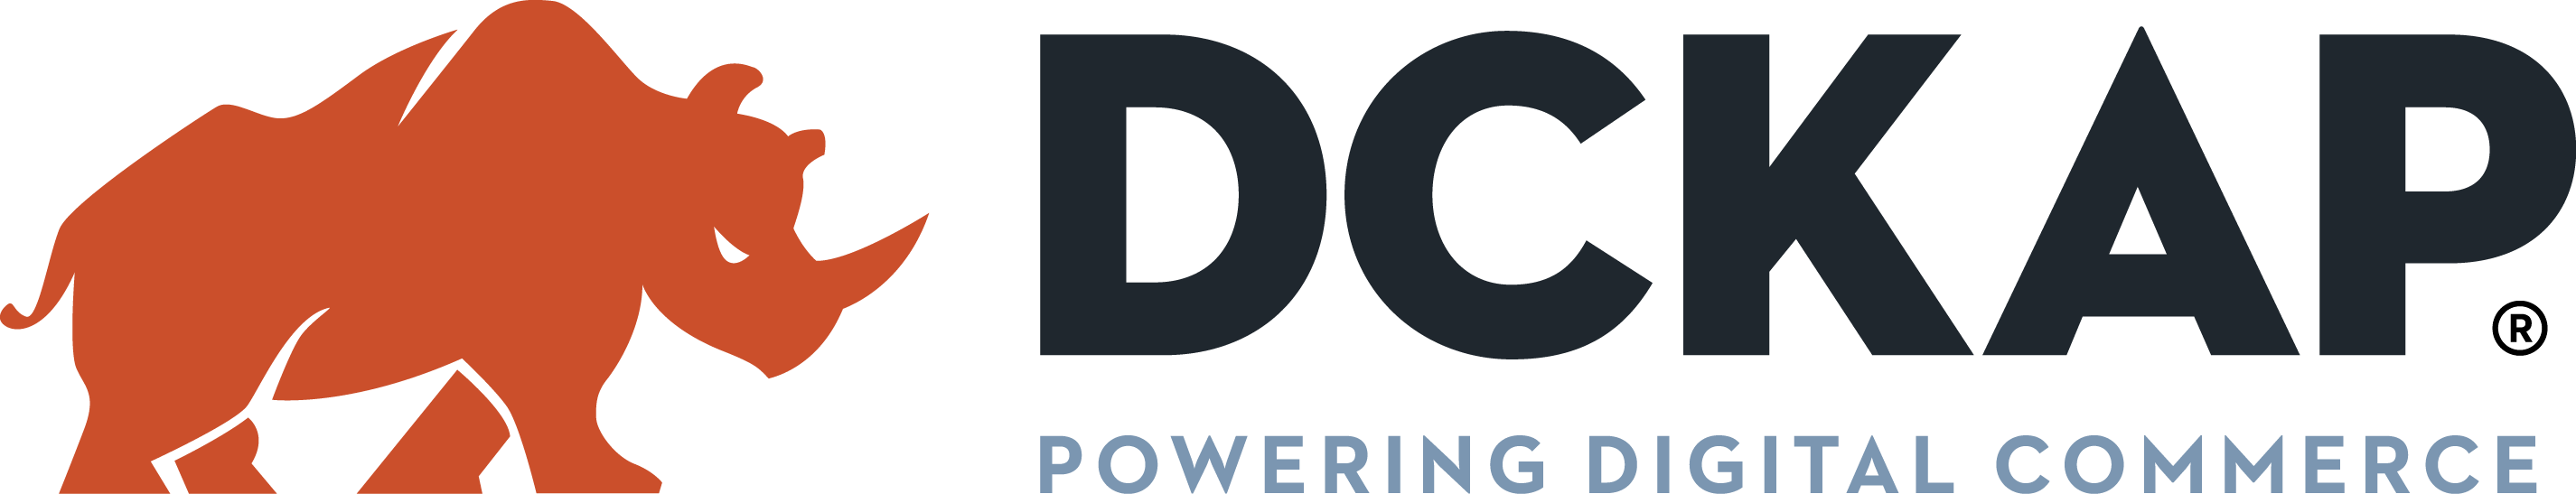 DCKAP Powering Digital Commerce